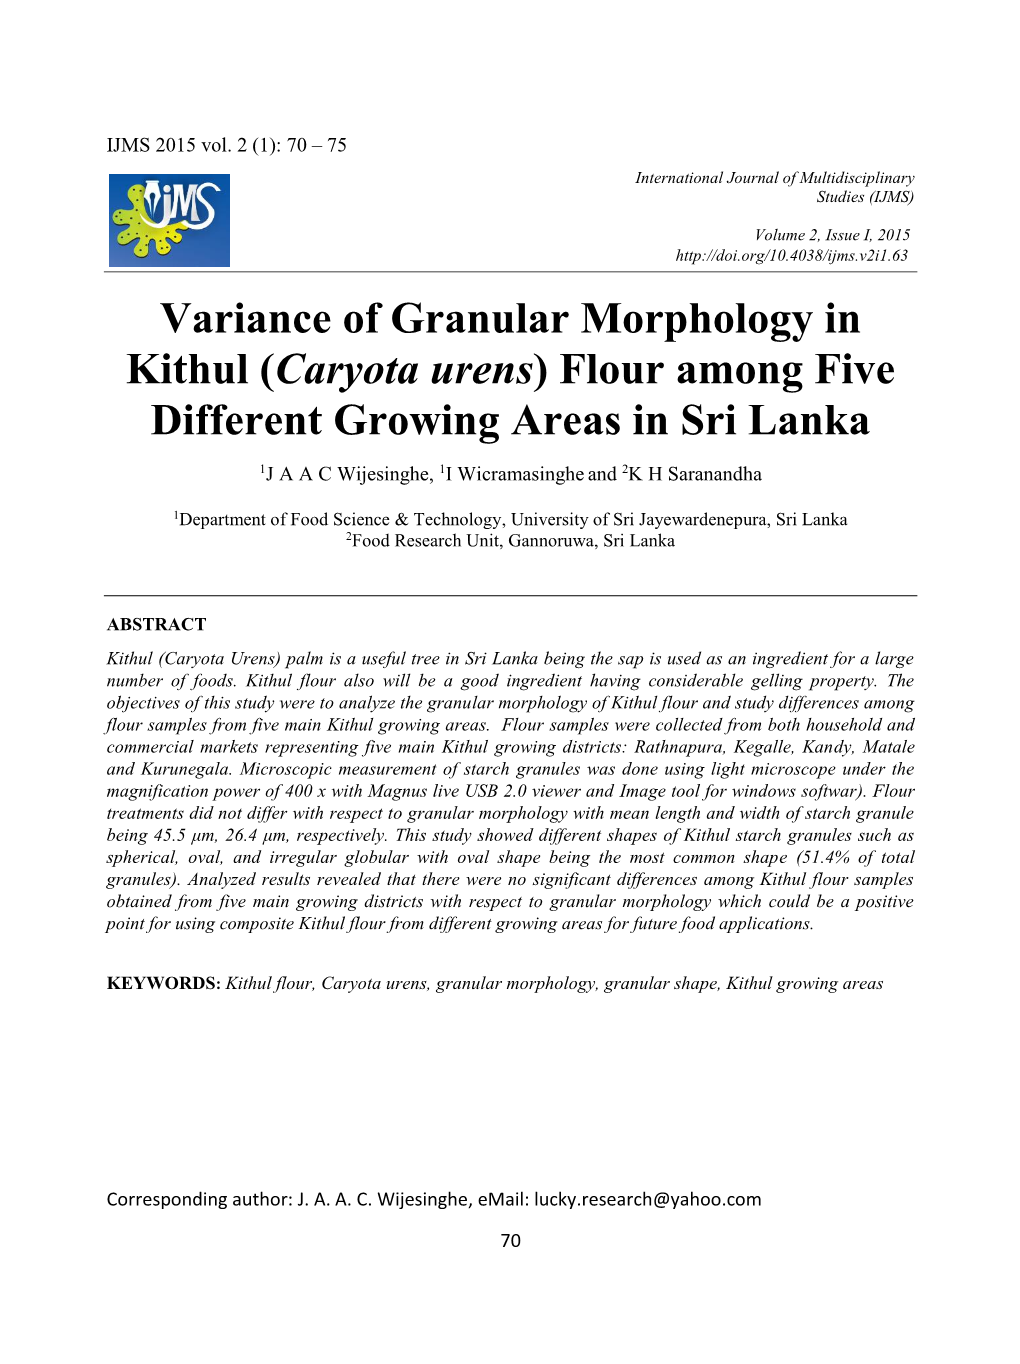 Variance of Granular Morphology in Kithul (Caryota Urens) Flour Among Five Different Growing Areas in Sri Lanka